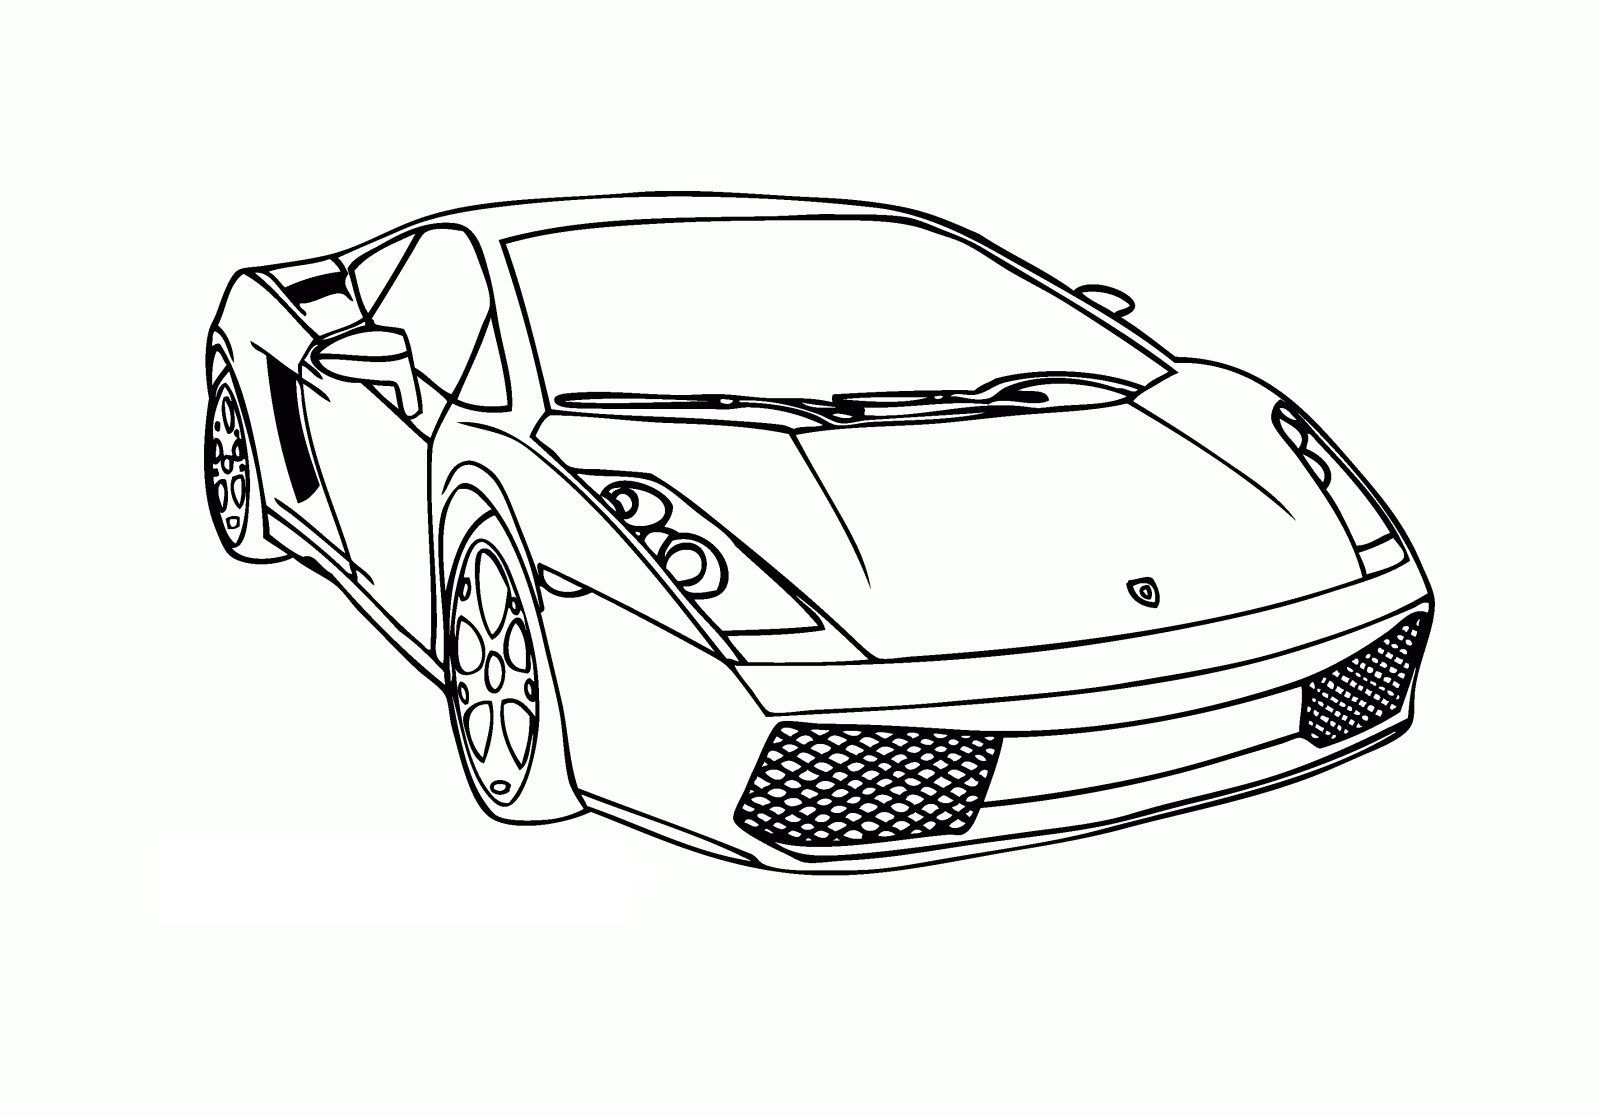 Lamborghini Coloring Page Printable - Printable Blank World